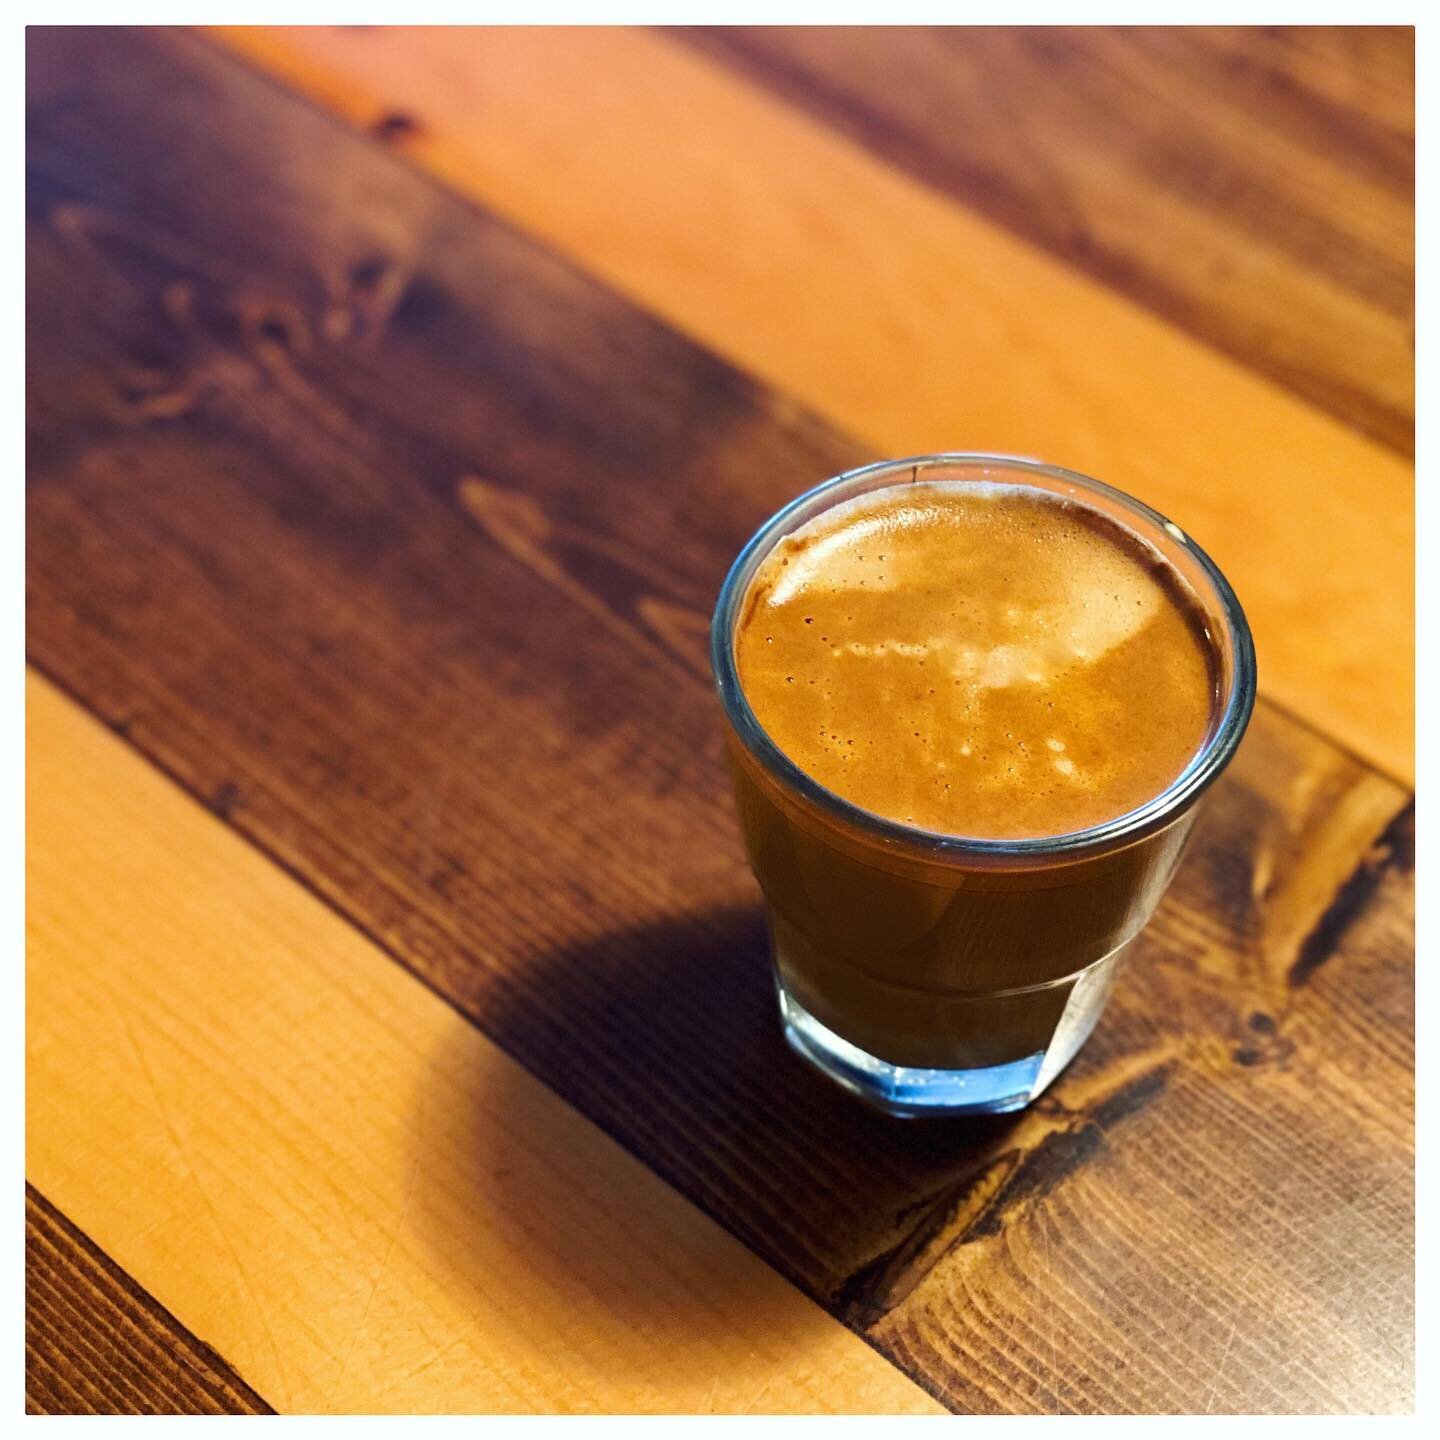 Cut Coffee. 
#Cortado #Espresso #FairFrade #Organic #EarthTones #Poughkeepsie #CoffeeHouse #NewYork #Crema #HudsonValley